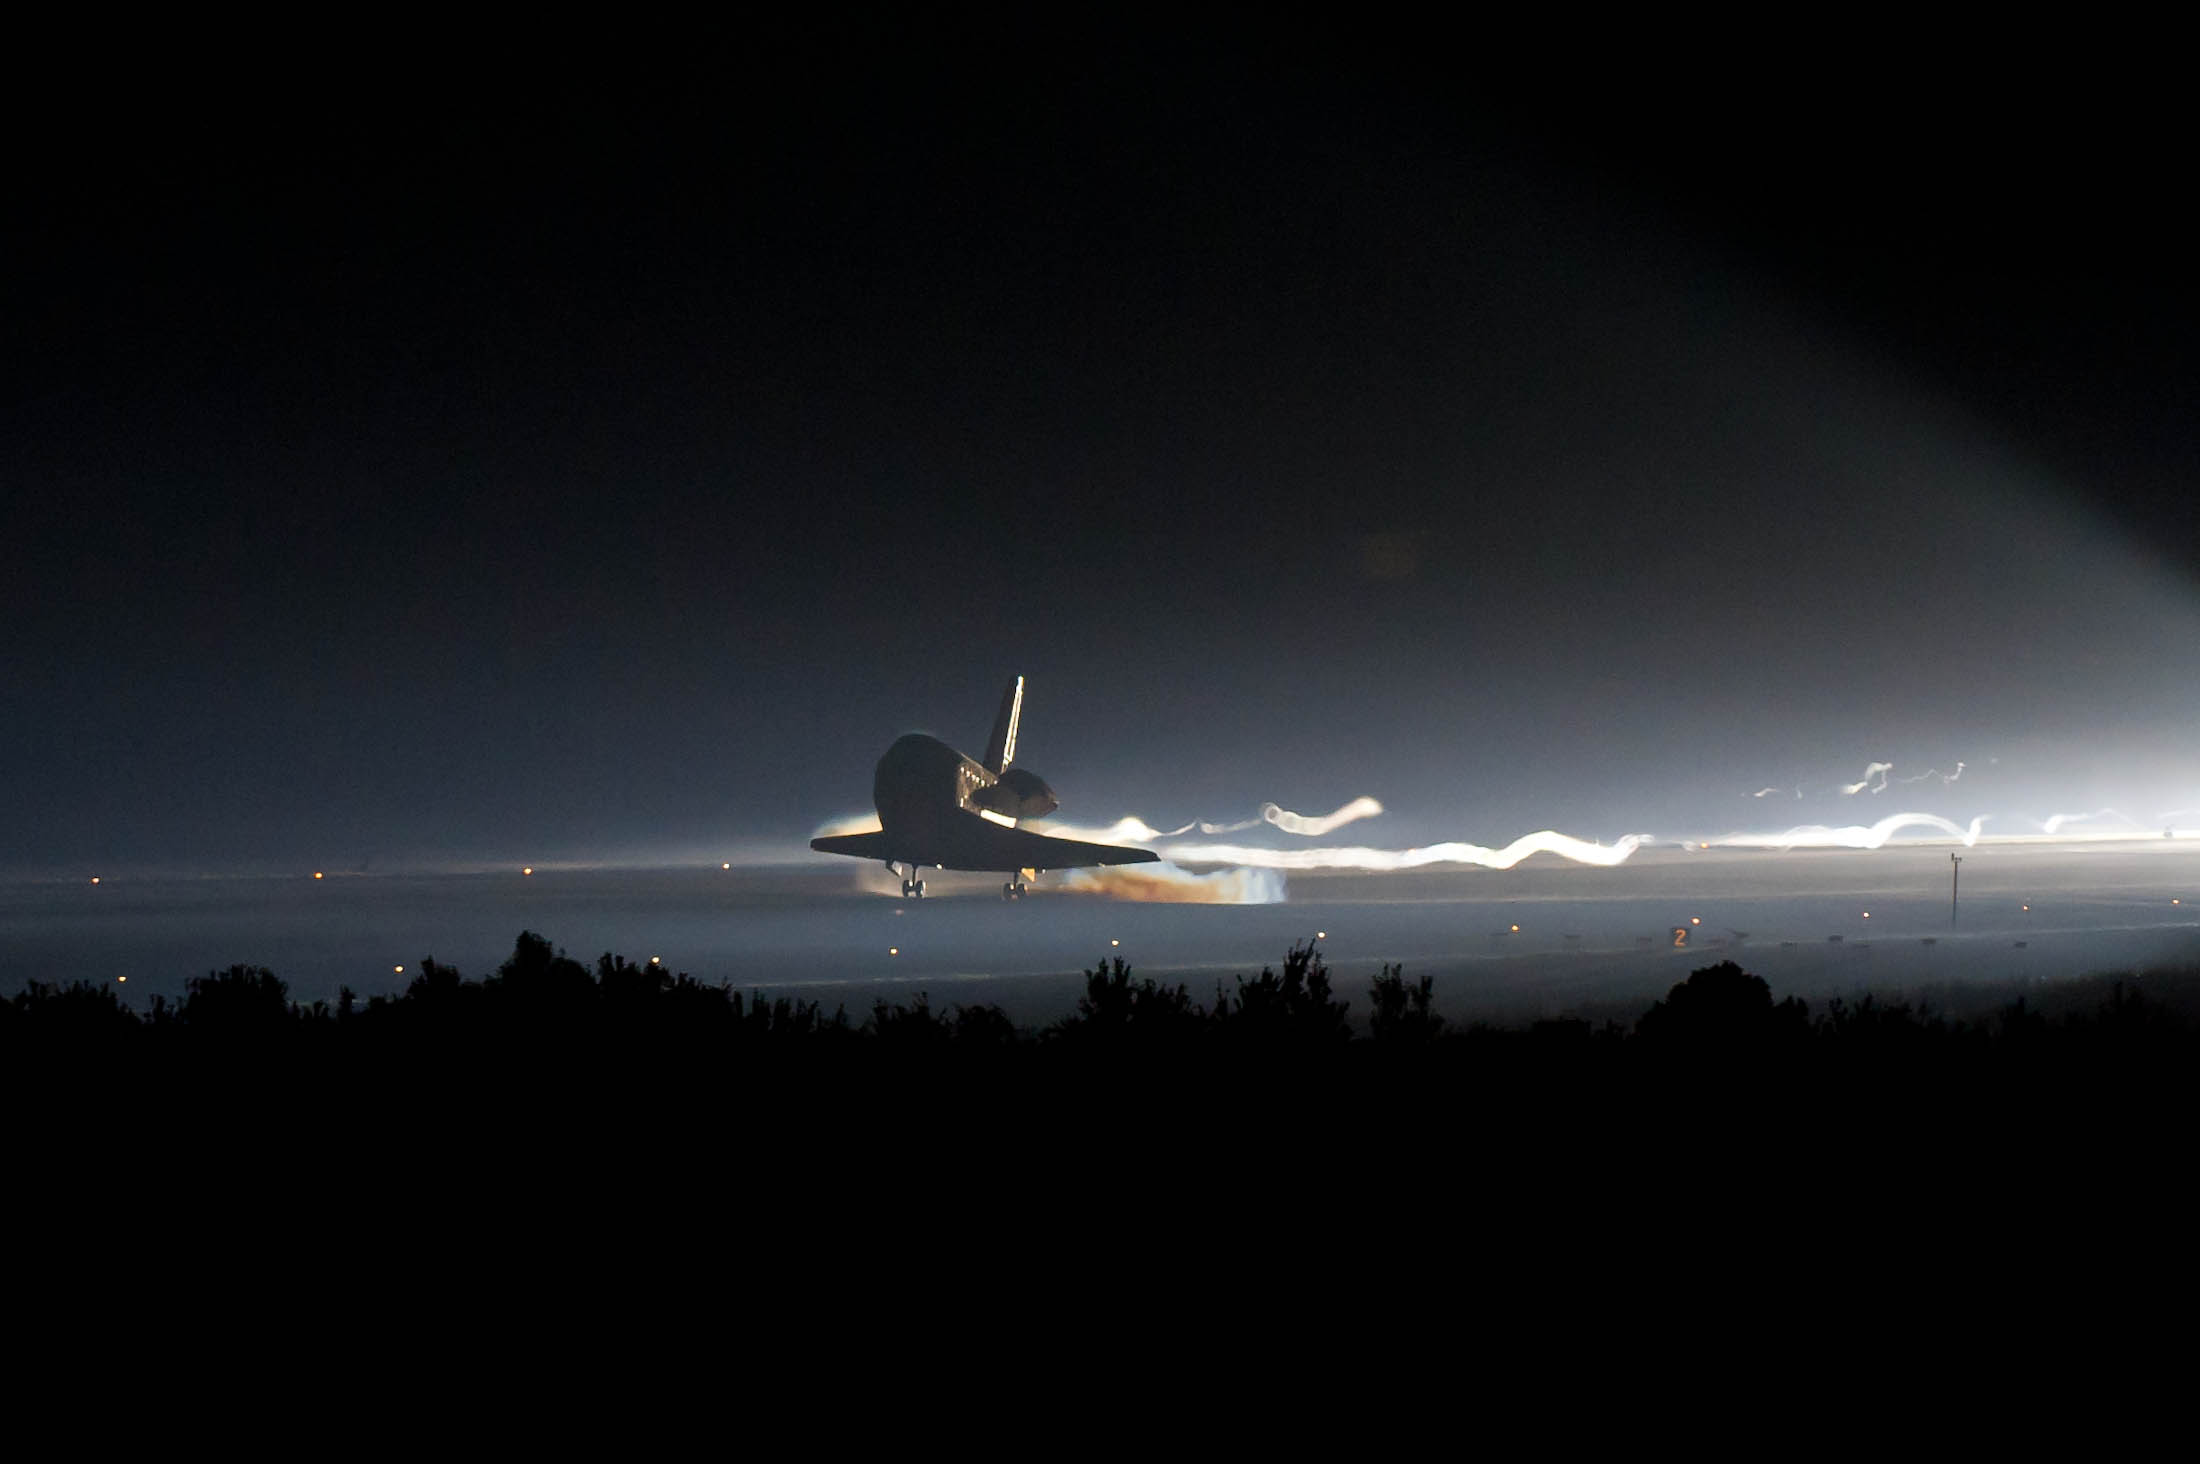 nasa space shuttle launch live stream